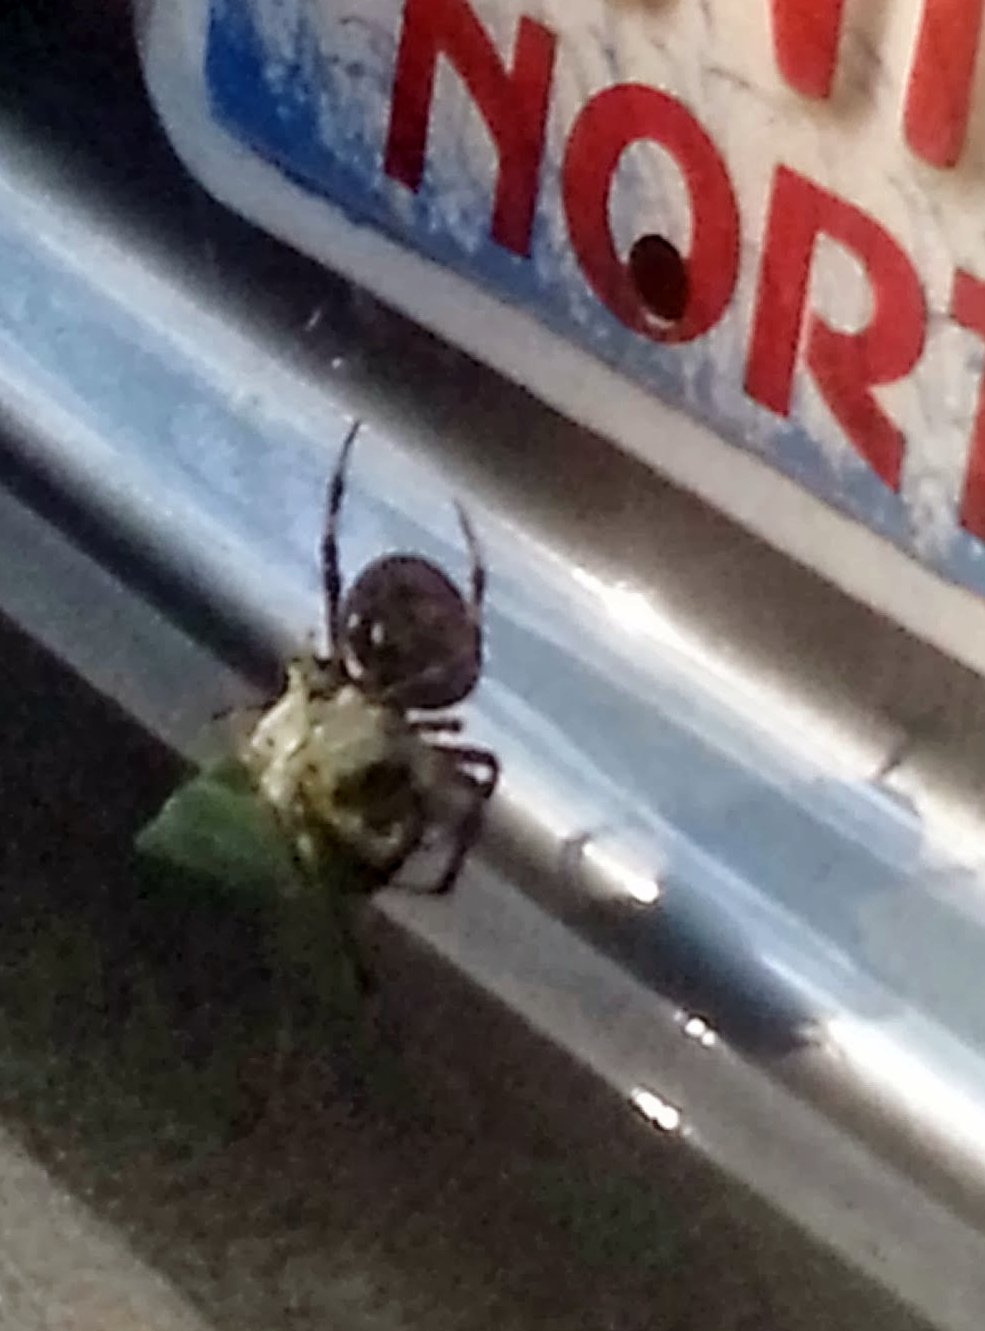 Big hairy spider on my car